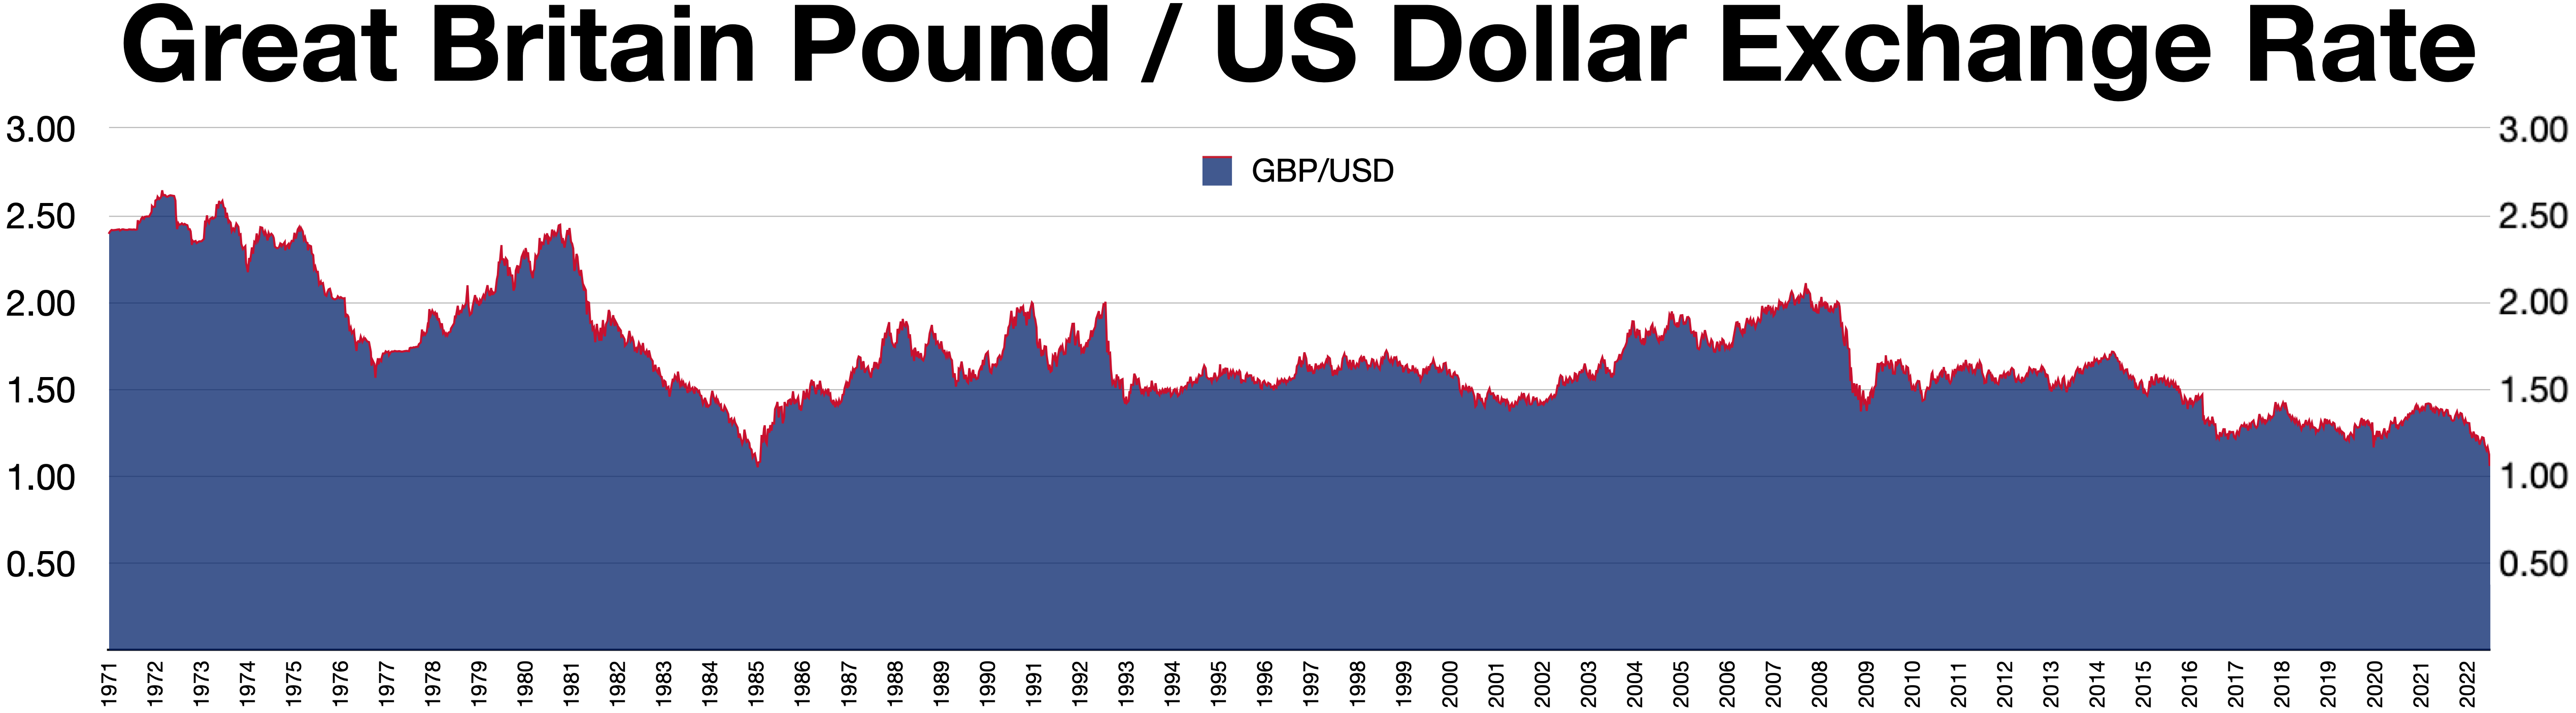 usd gbp exchange rate